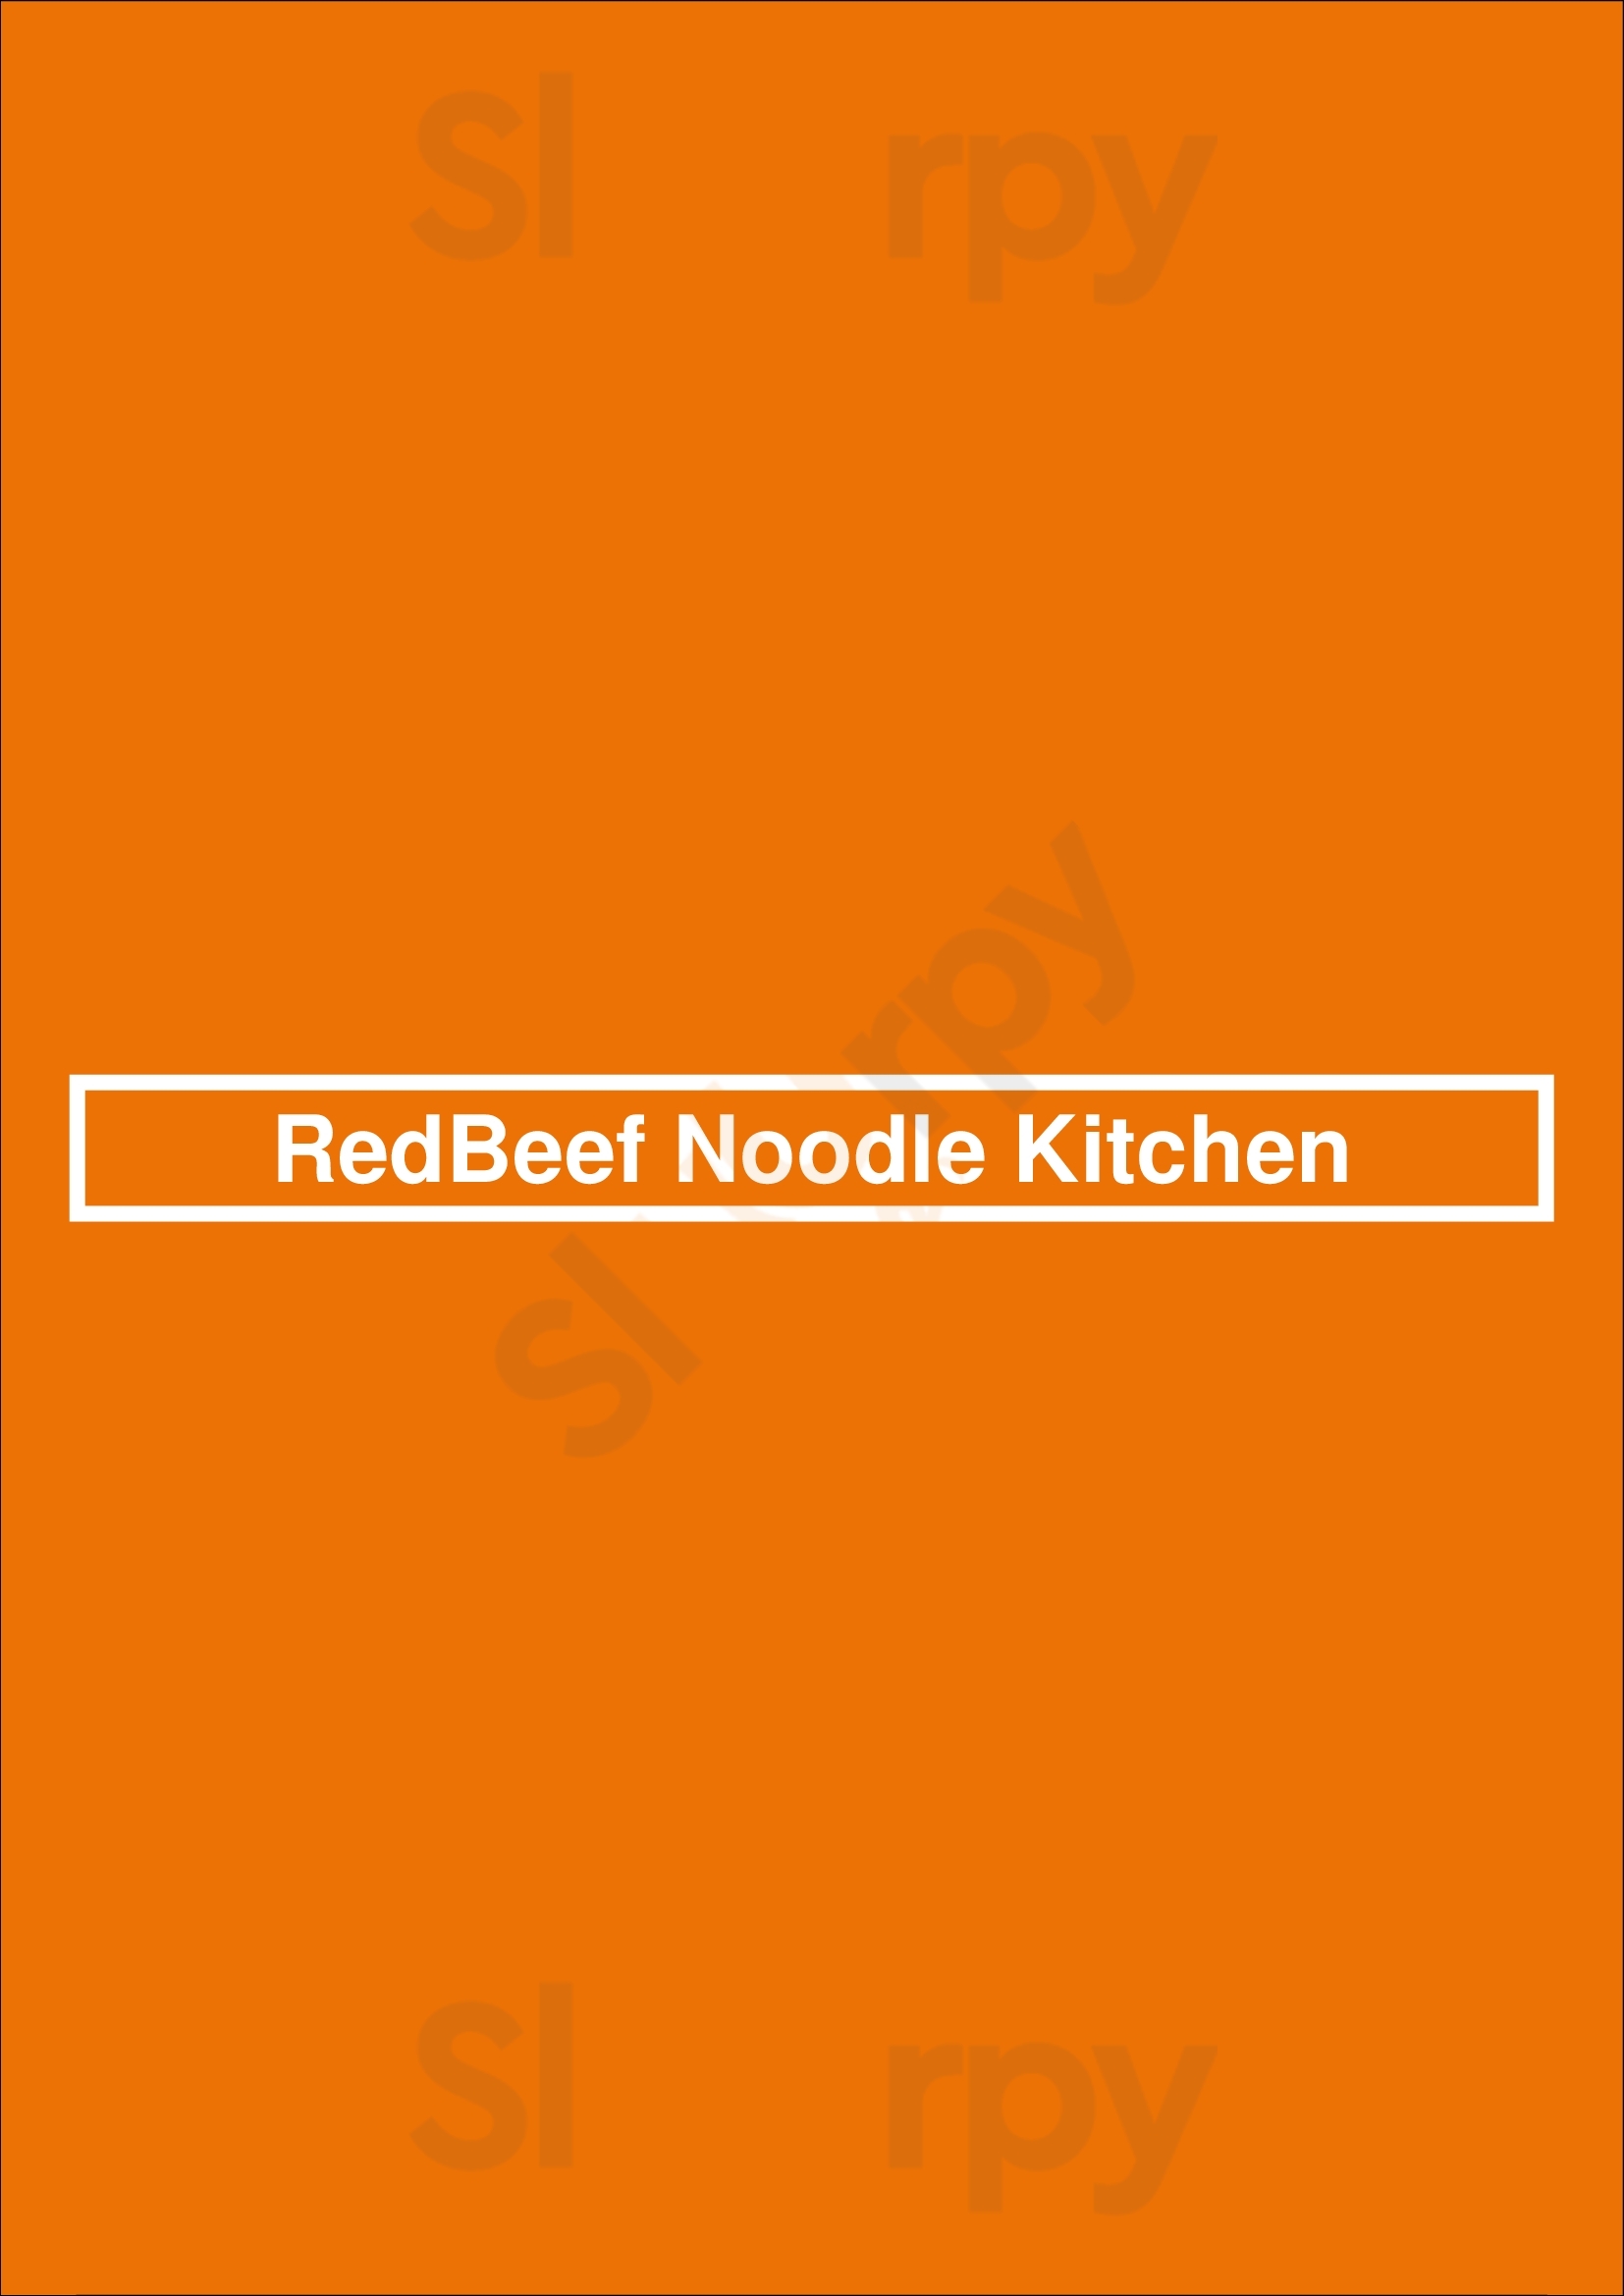 Redbeef Noodle Kitchen Vancouver Menu - 1